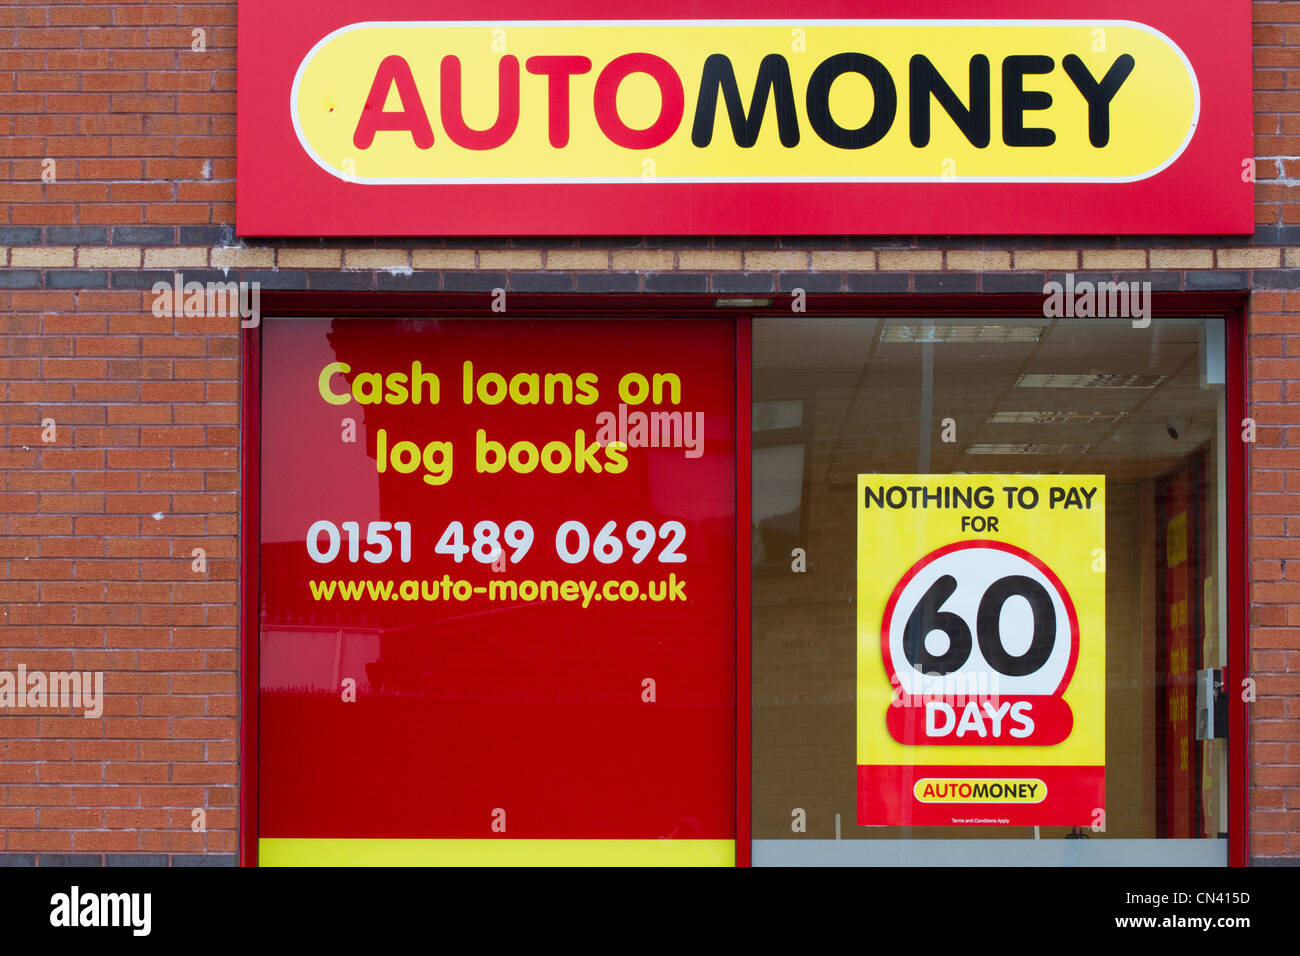 Auto money log book loan Stock Photo